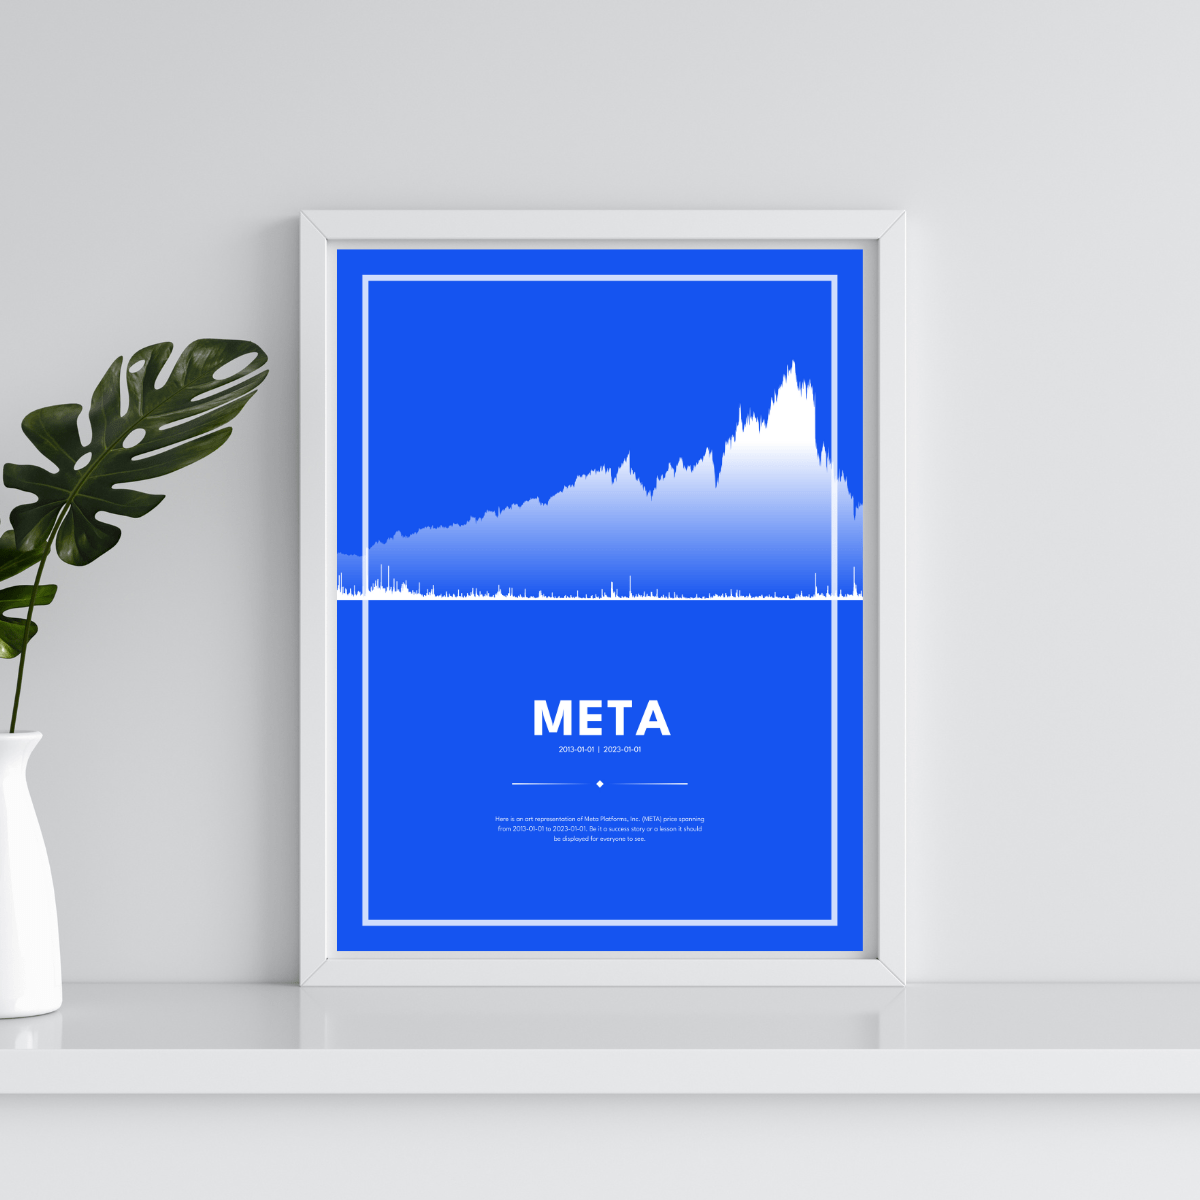 Meta Inc. (META) trading poster hanging on a wall